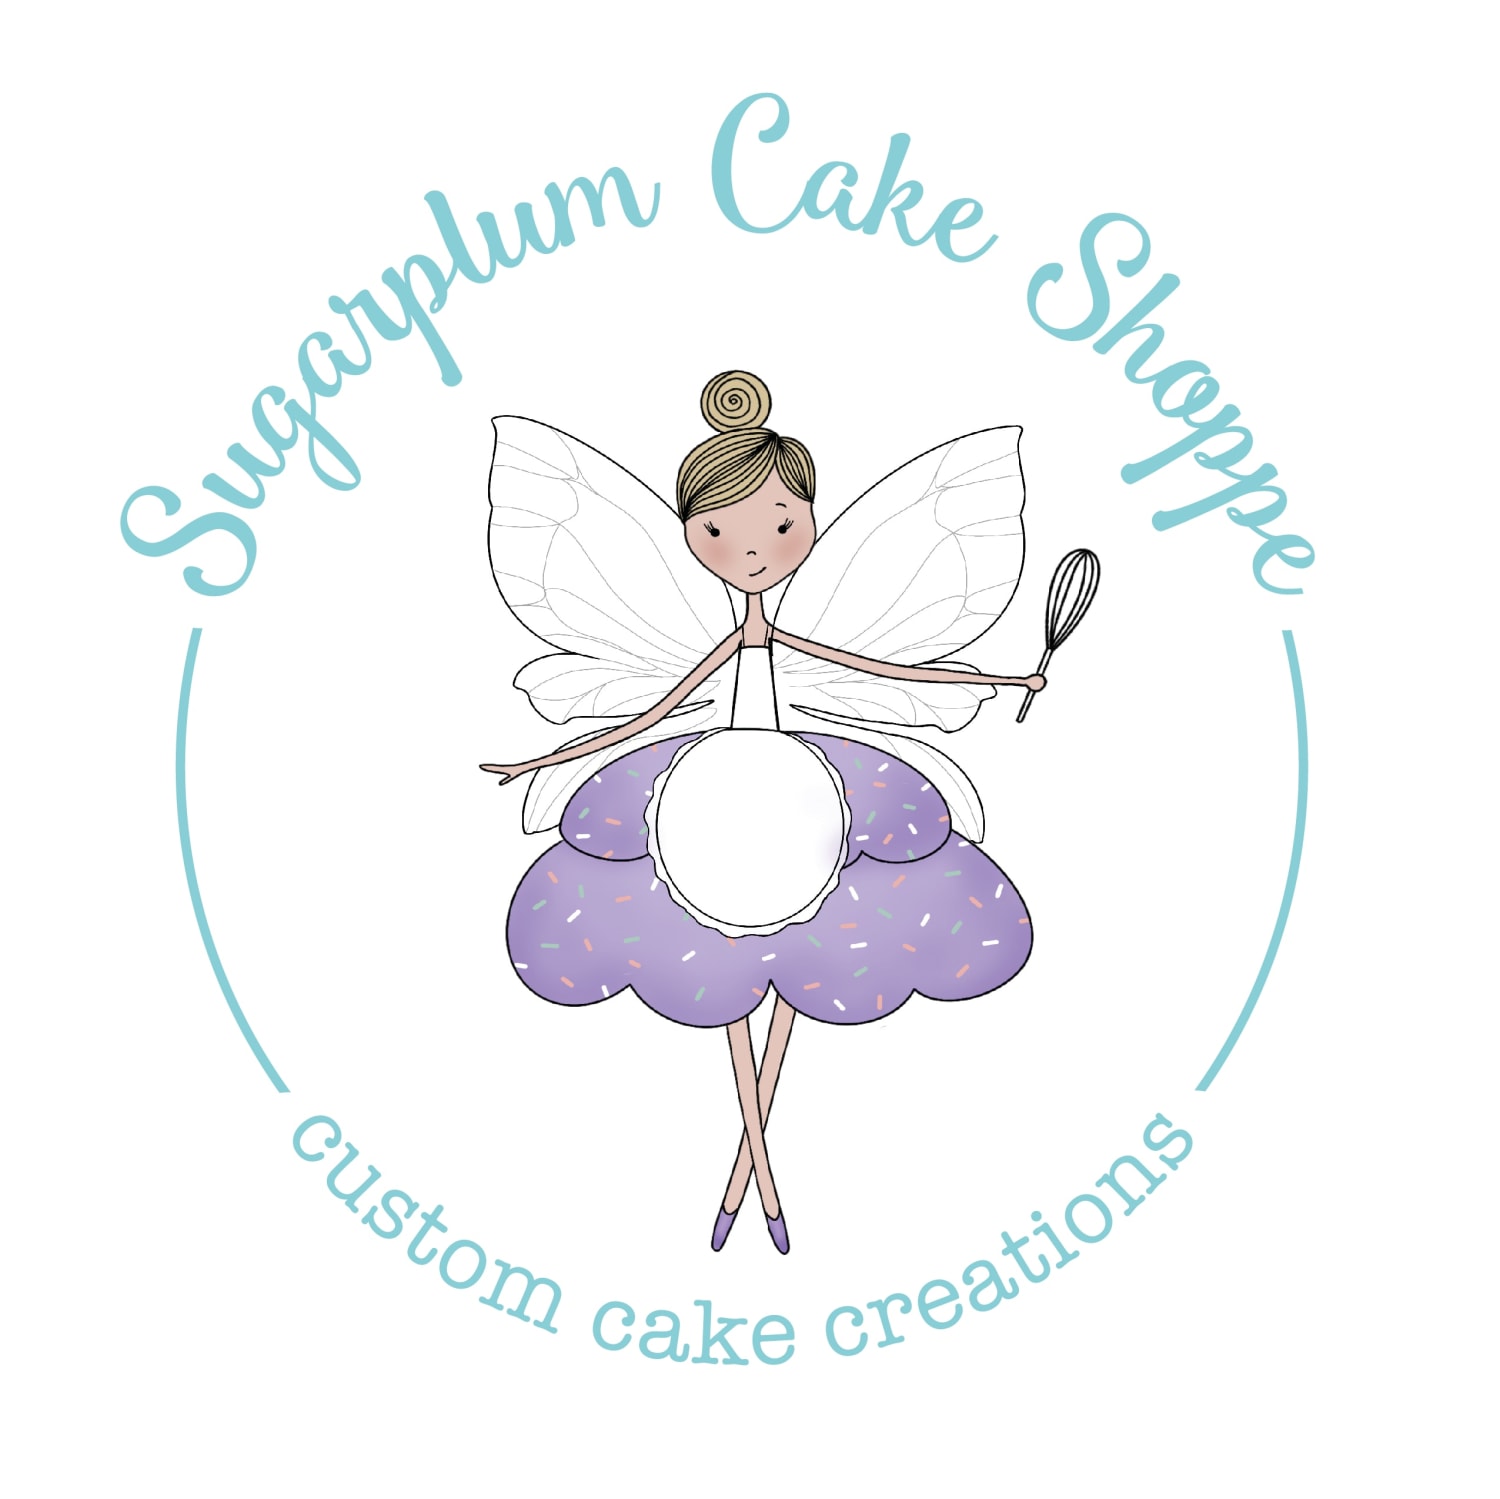 Sugarplum Cake Shoppe